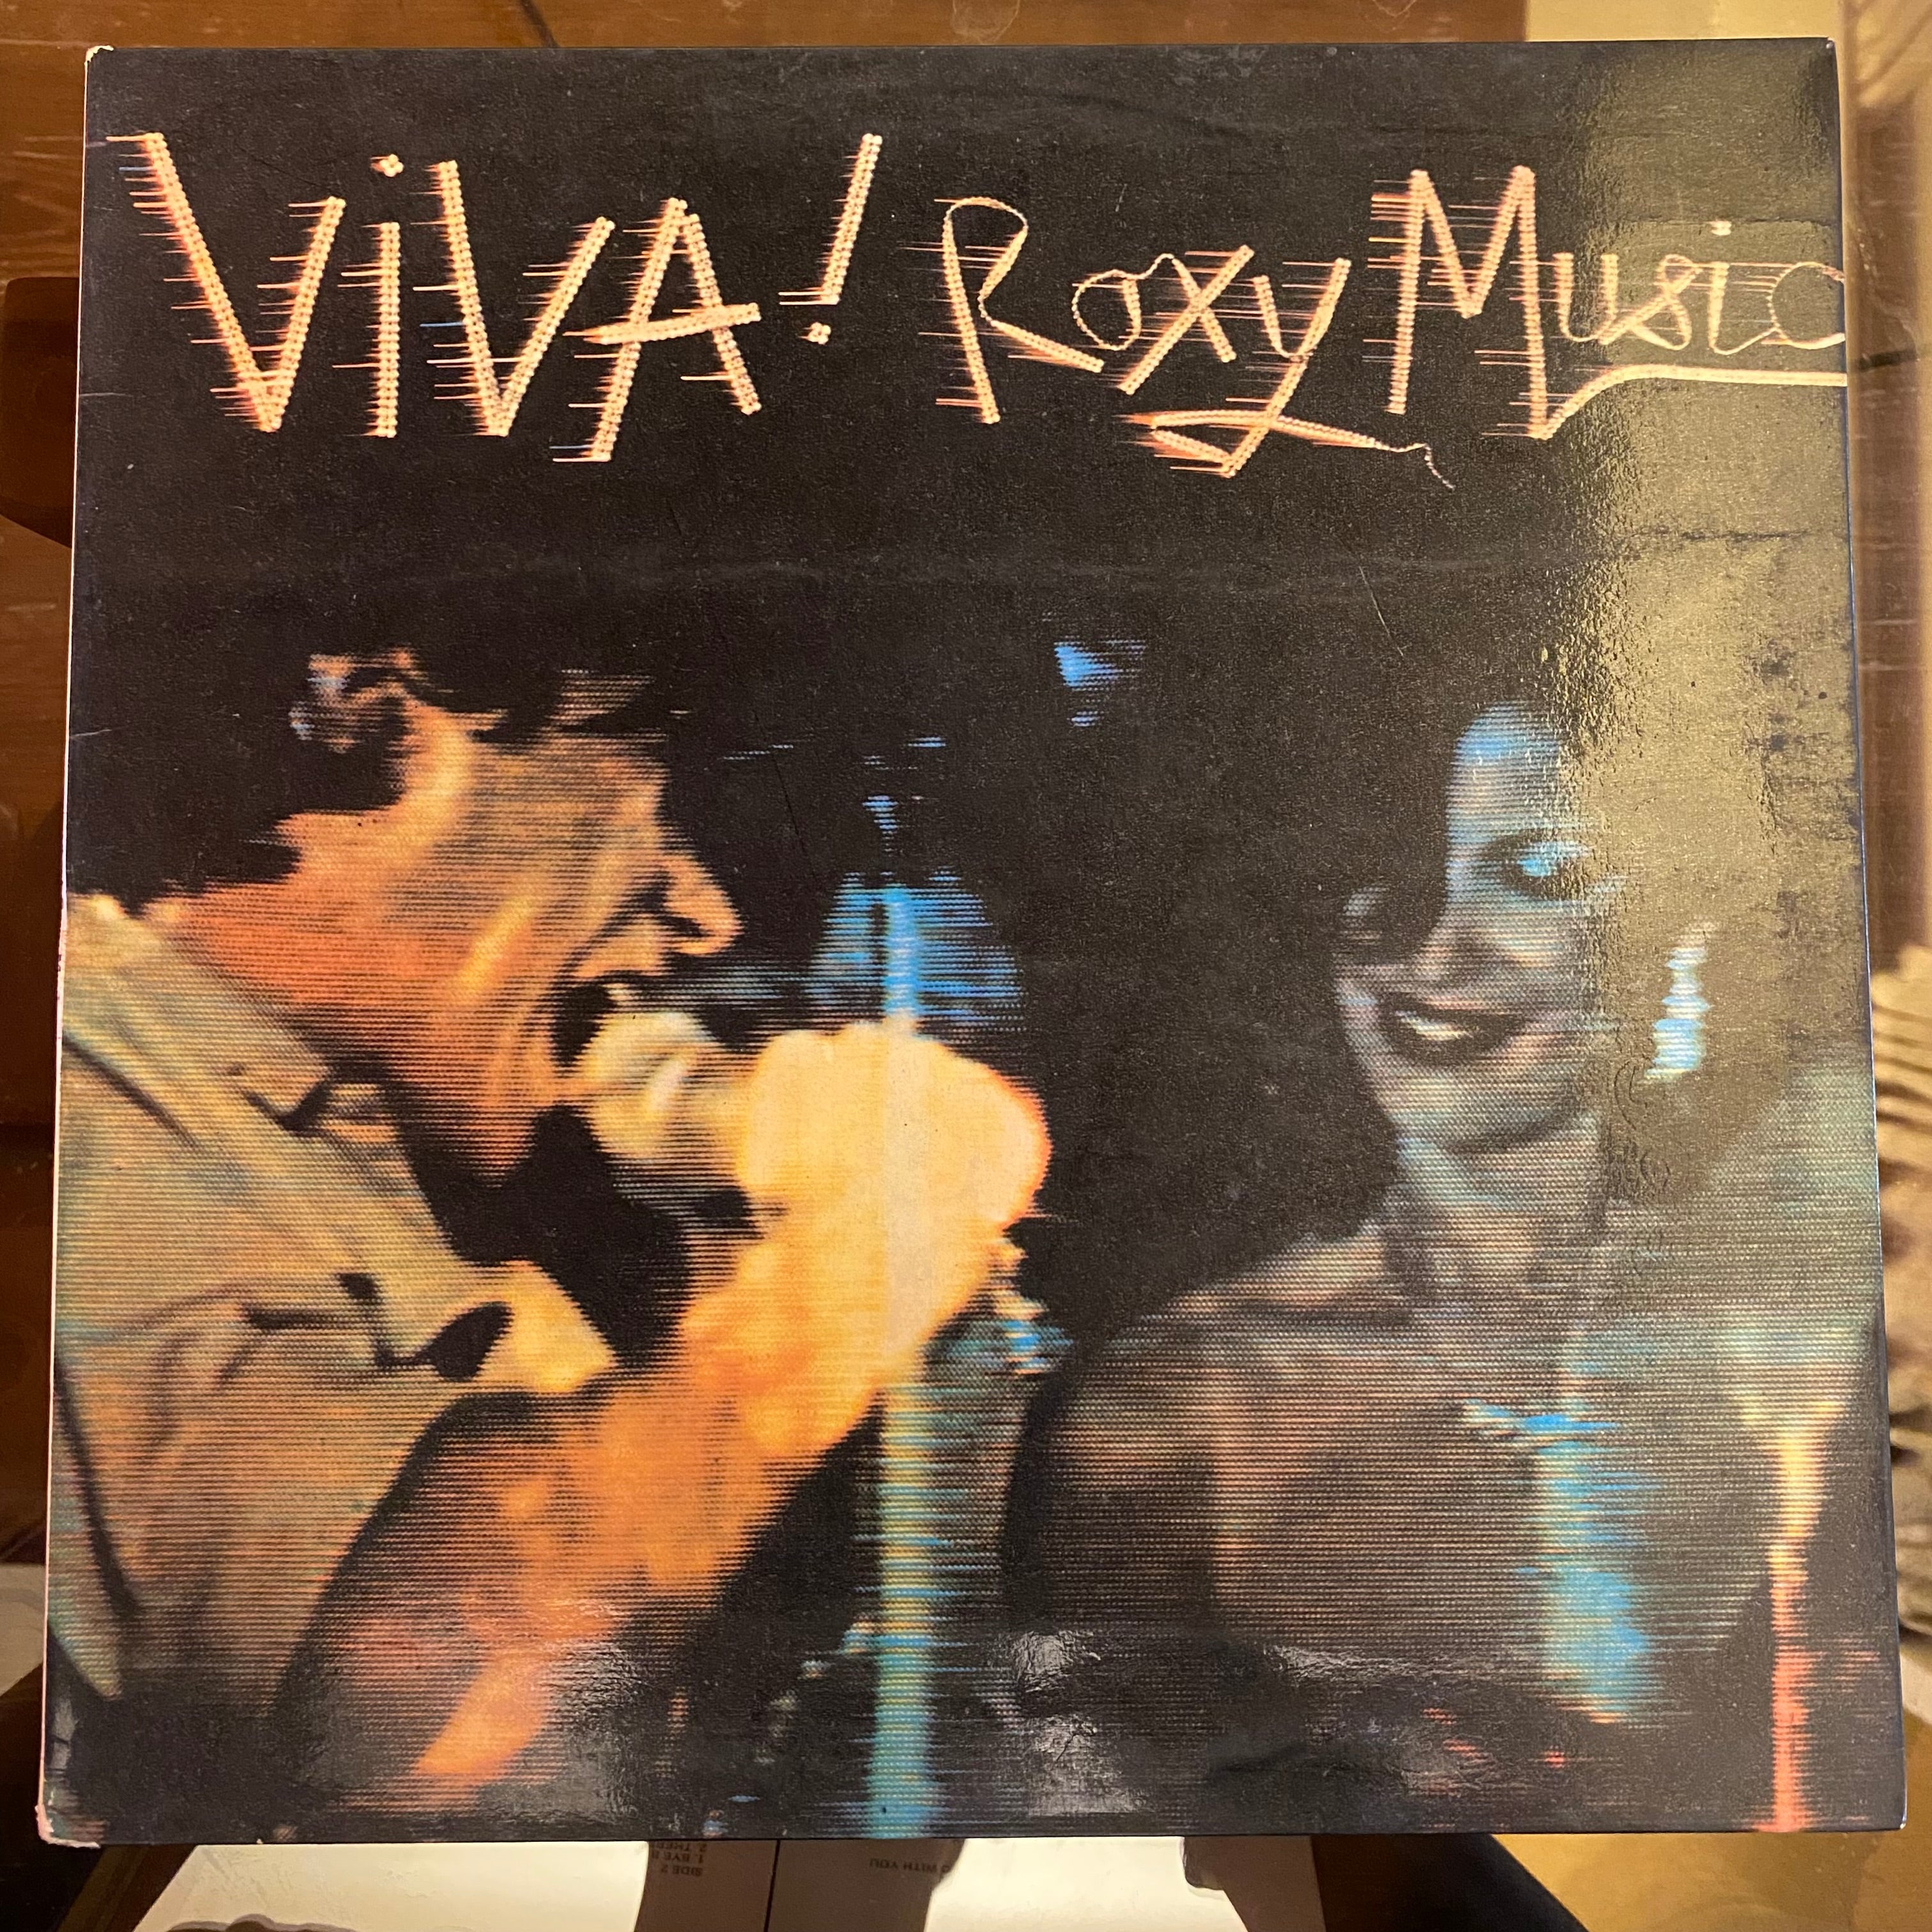 Roxy Music – Viva ! Roxy Music - The Live Roxy Music Album (Used Vinyl - VG) AS Marketplace